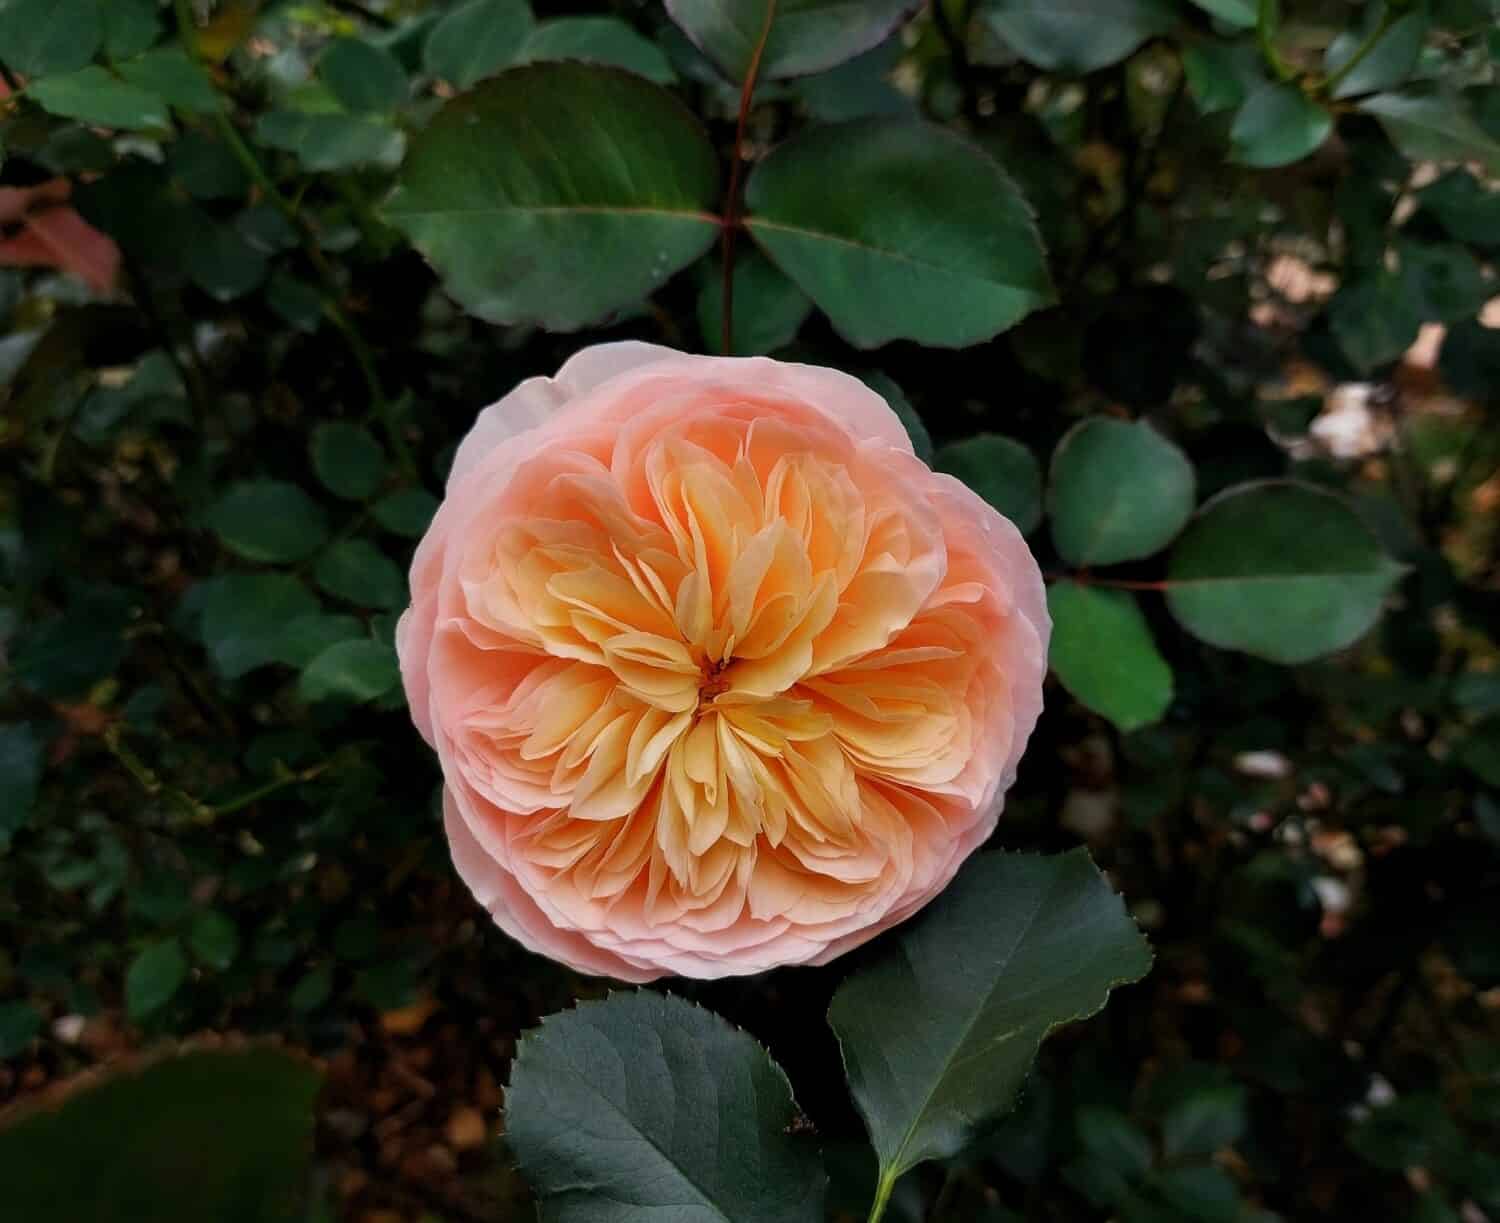 Light pink, peach and orange color rose Juliet flower in the garden. Juliet rose flower.